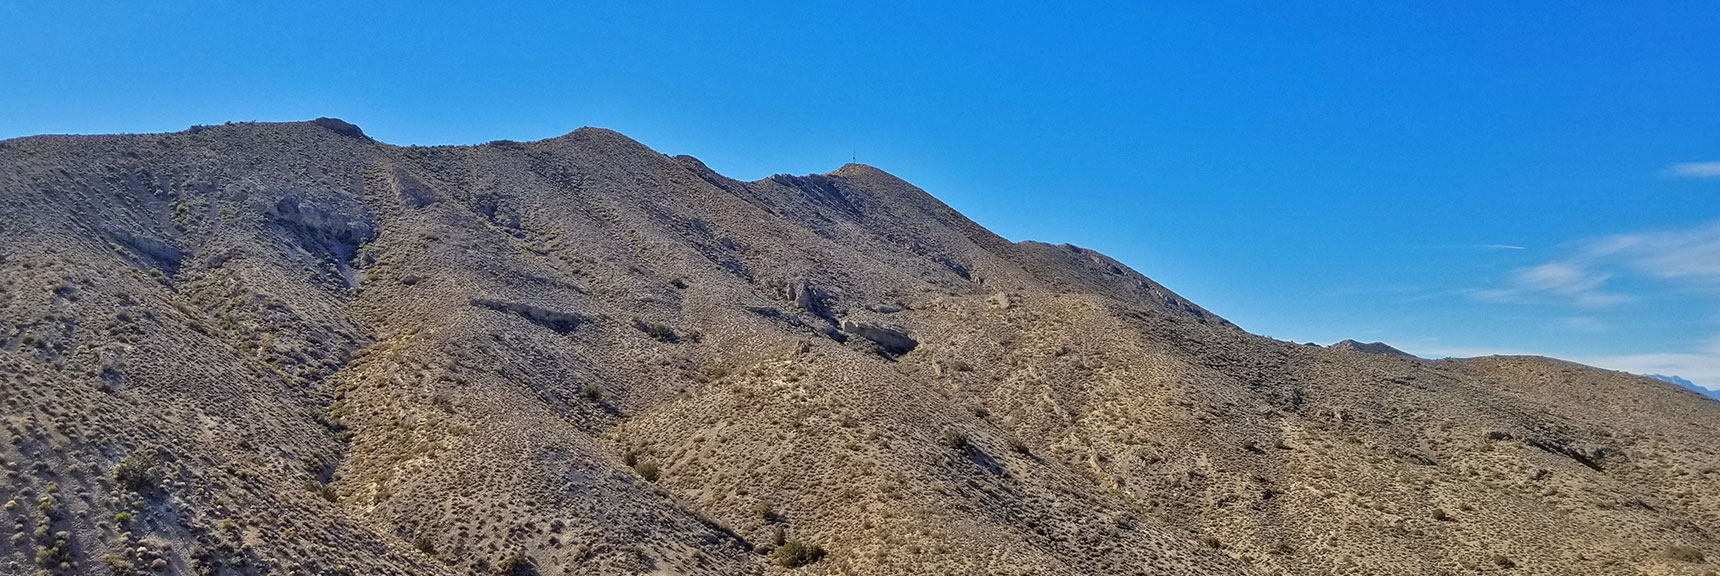 On a Ridge Approaching the "True" Eastern Summit of Gass Peak | Gass Peak Grand Crossing | Desert National Wildlife Refuge to Centennial Hills Las Vegas via Gass Peak Summit by Foot